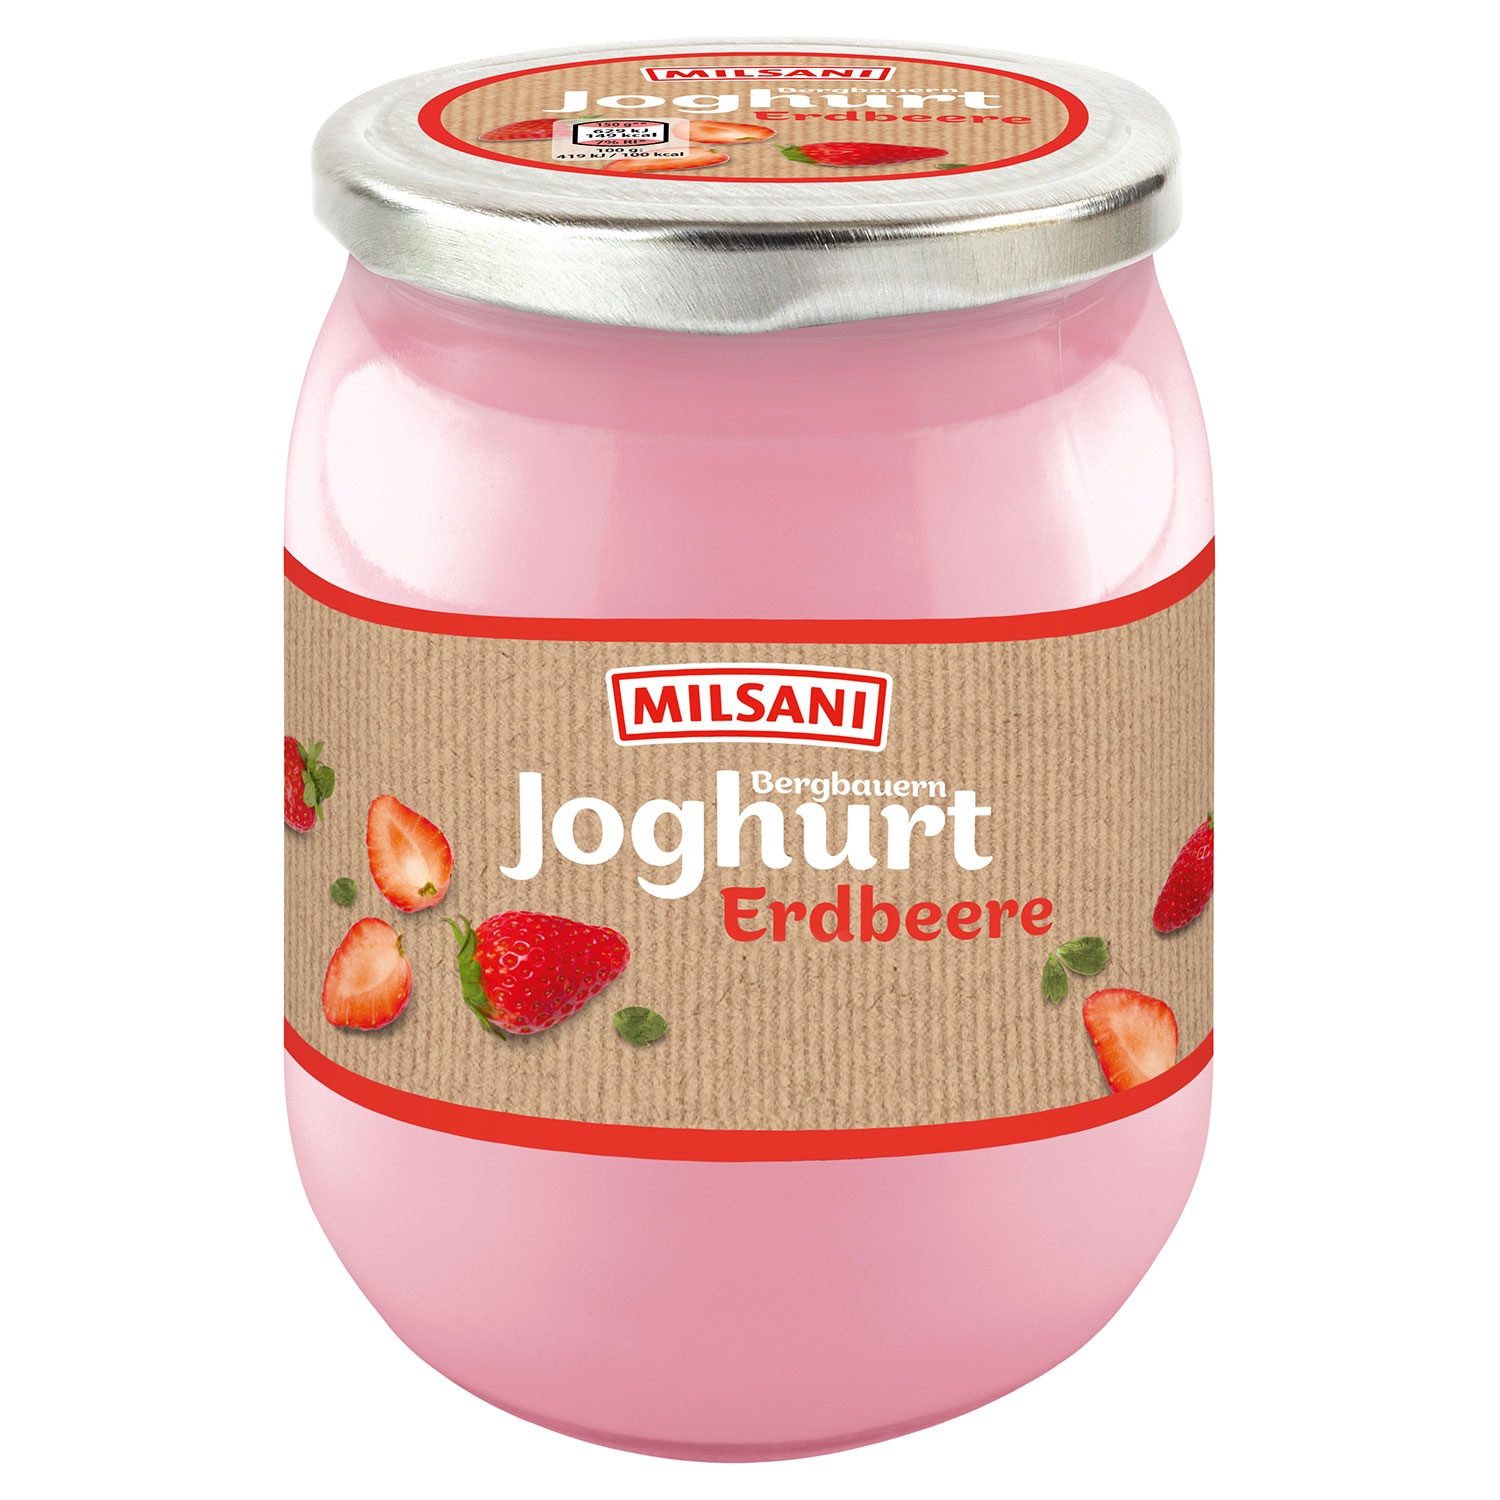 MILSANI Bergbauern-Joghurt 450 g, Erdbeer